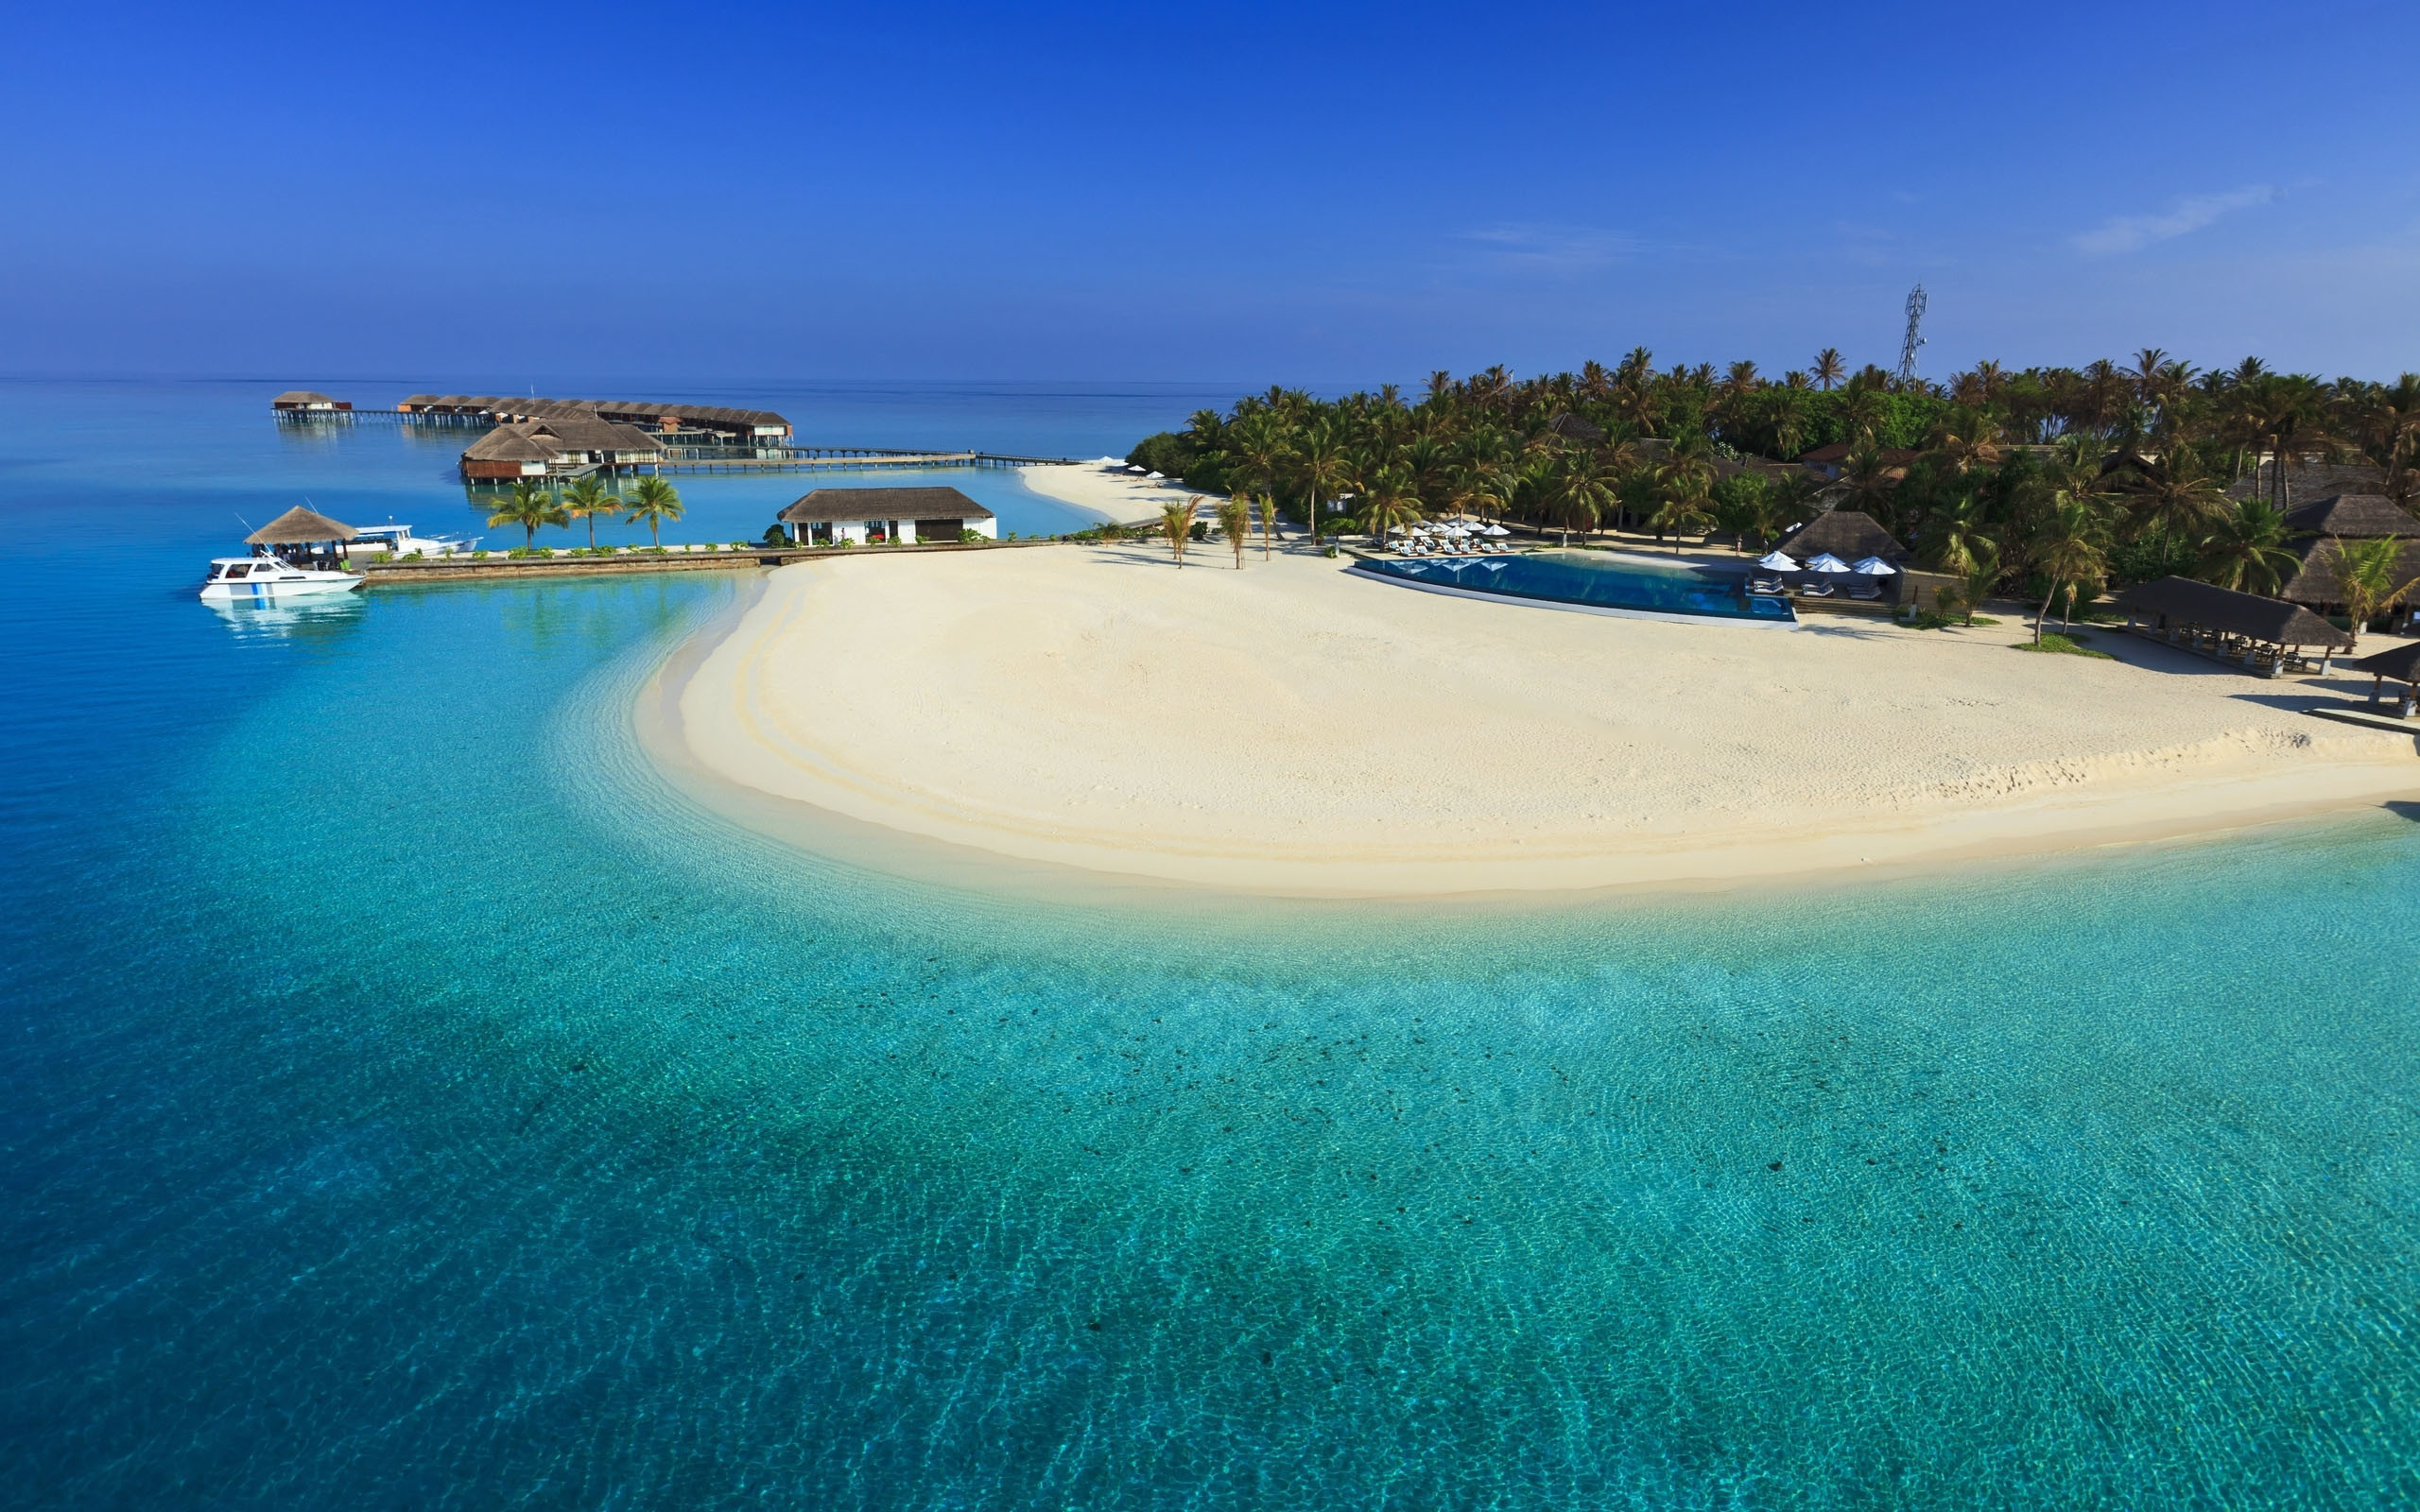 2560x1600 Explore Beautiful Beach, Beautiful Places, and more! Maldives Luxury Resort  Iphone Panoramic Wallpaper HD Pic